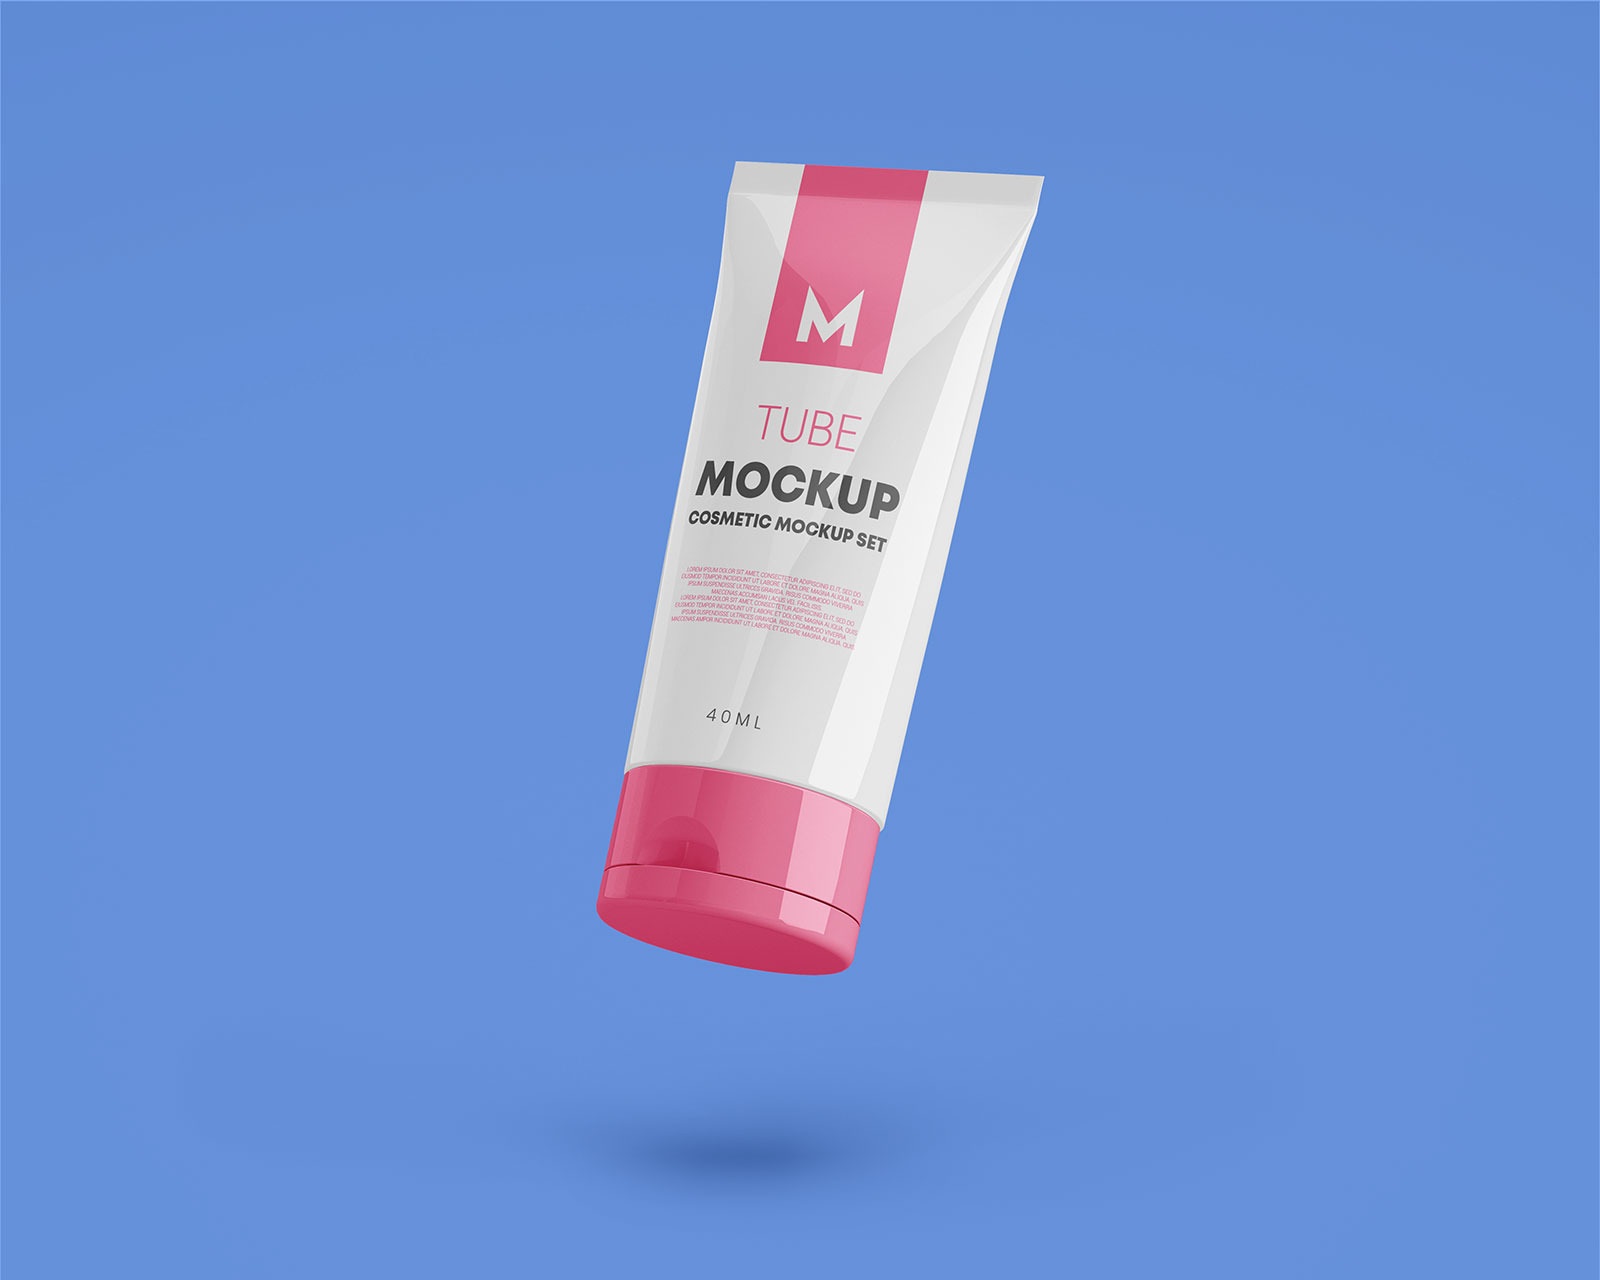 Free-HQ-Cosmetic-Cream-Tube-Mockup-PSD-Set-2